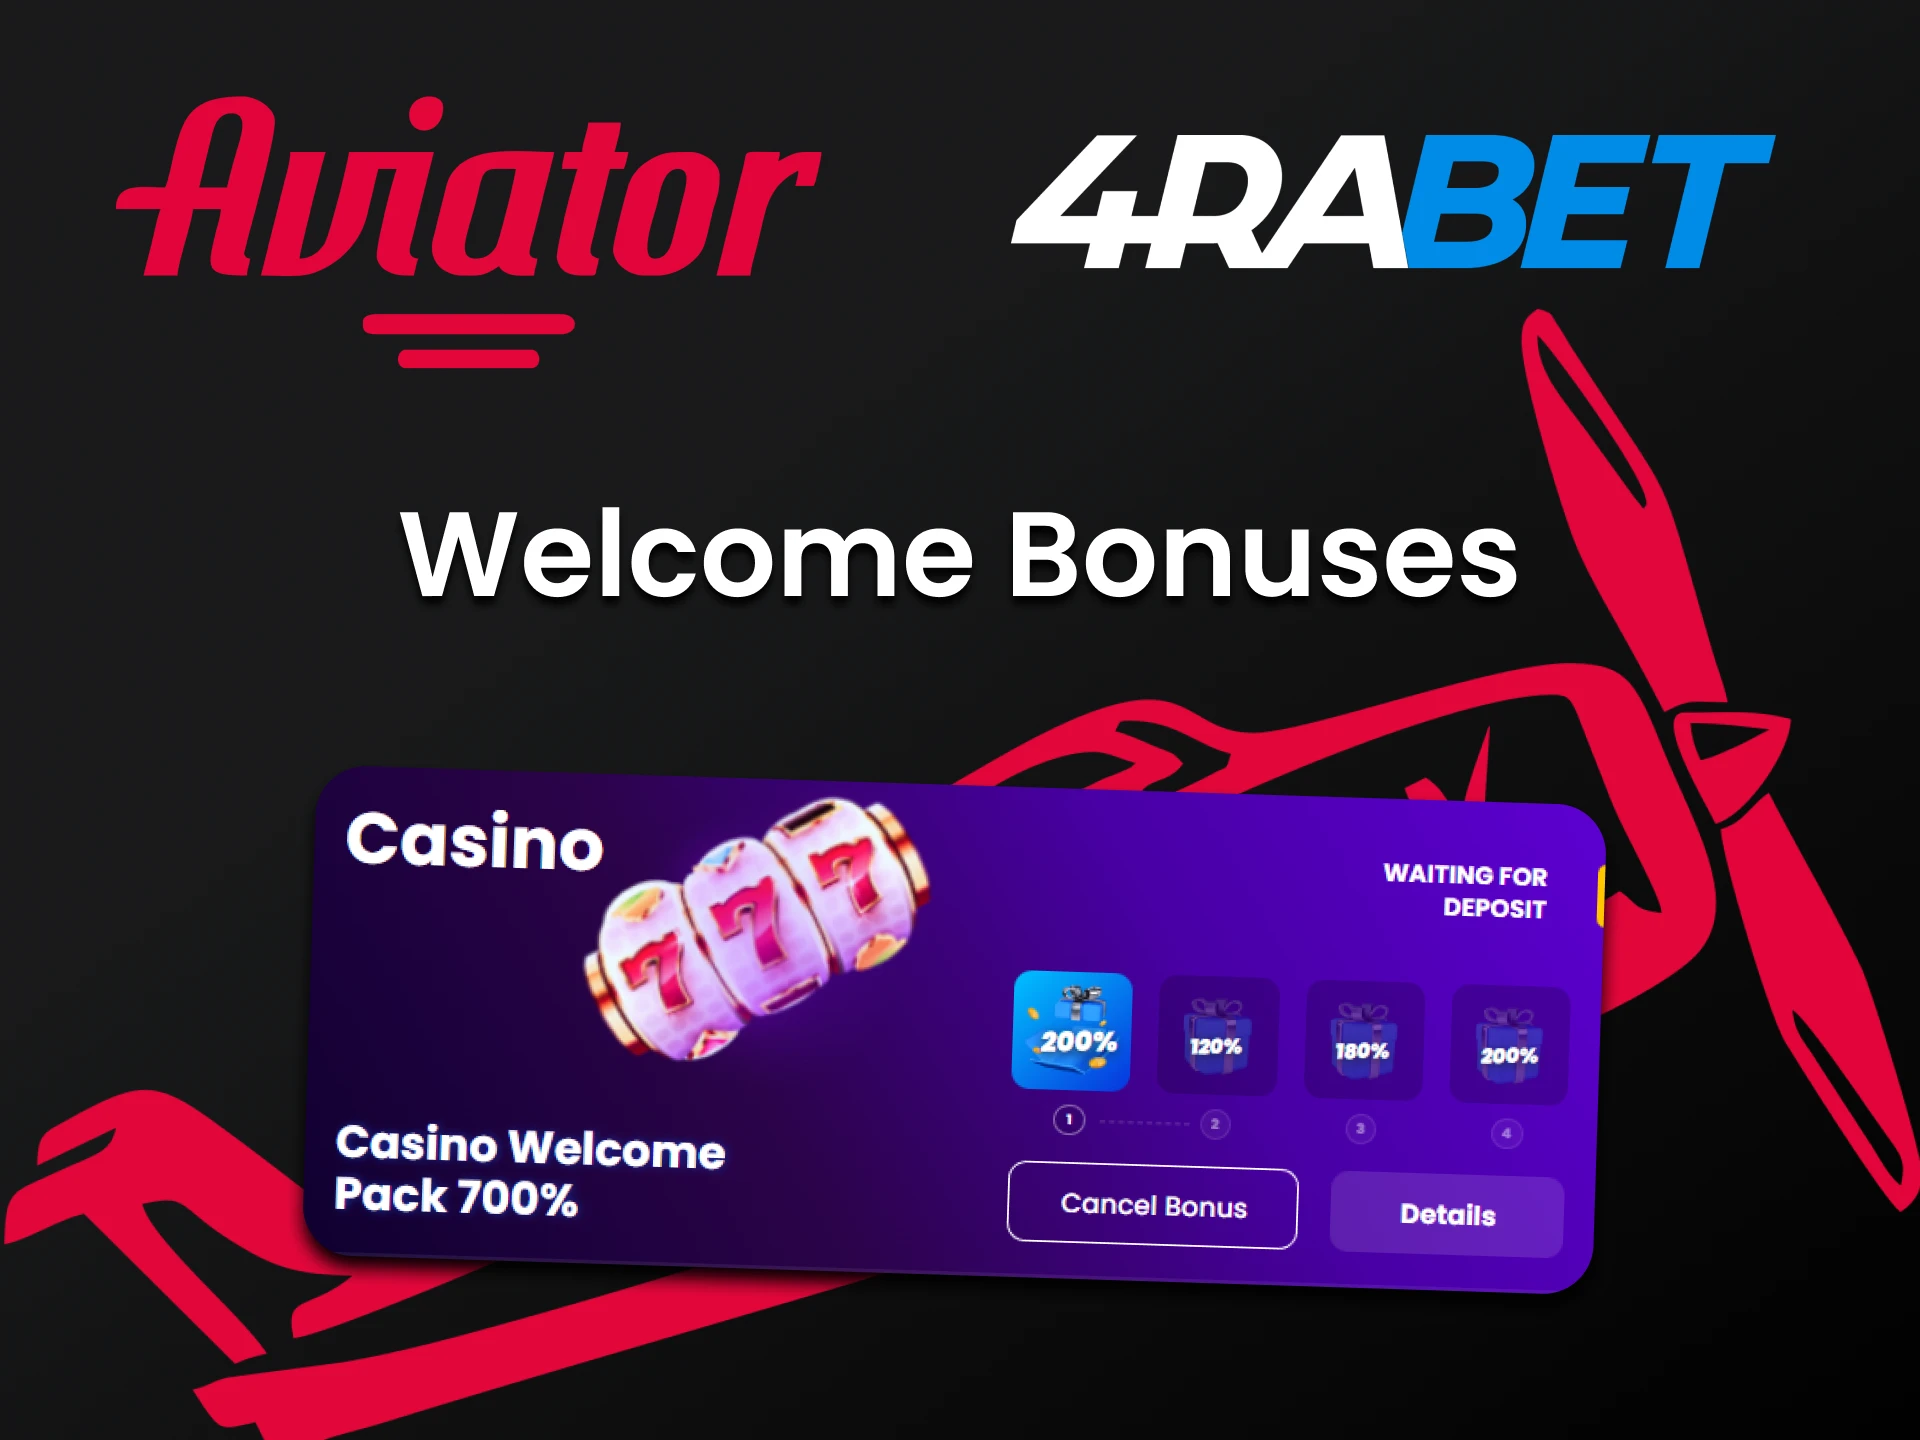 By choosing 4rabet to play Aviator you get bonuses.